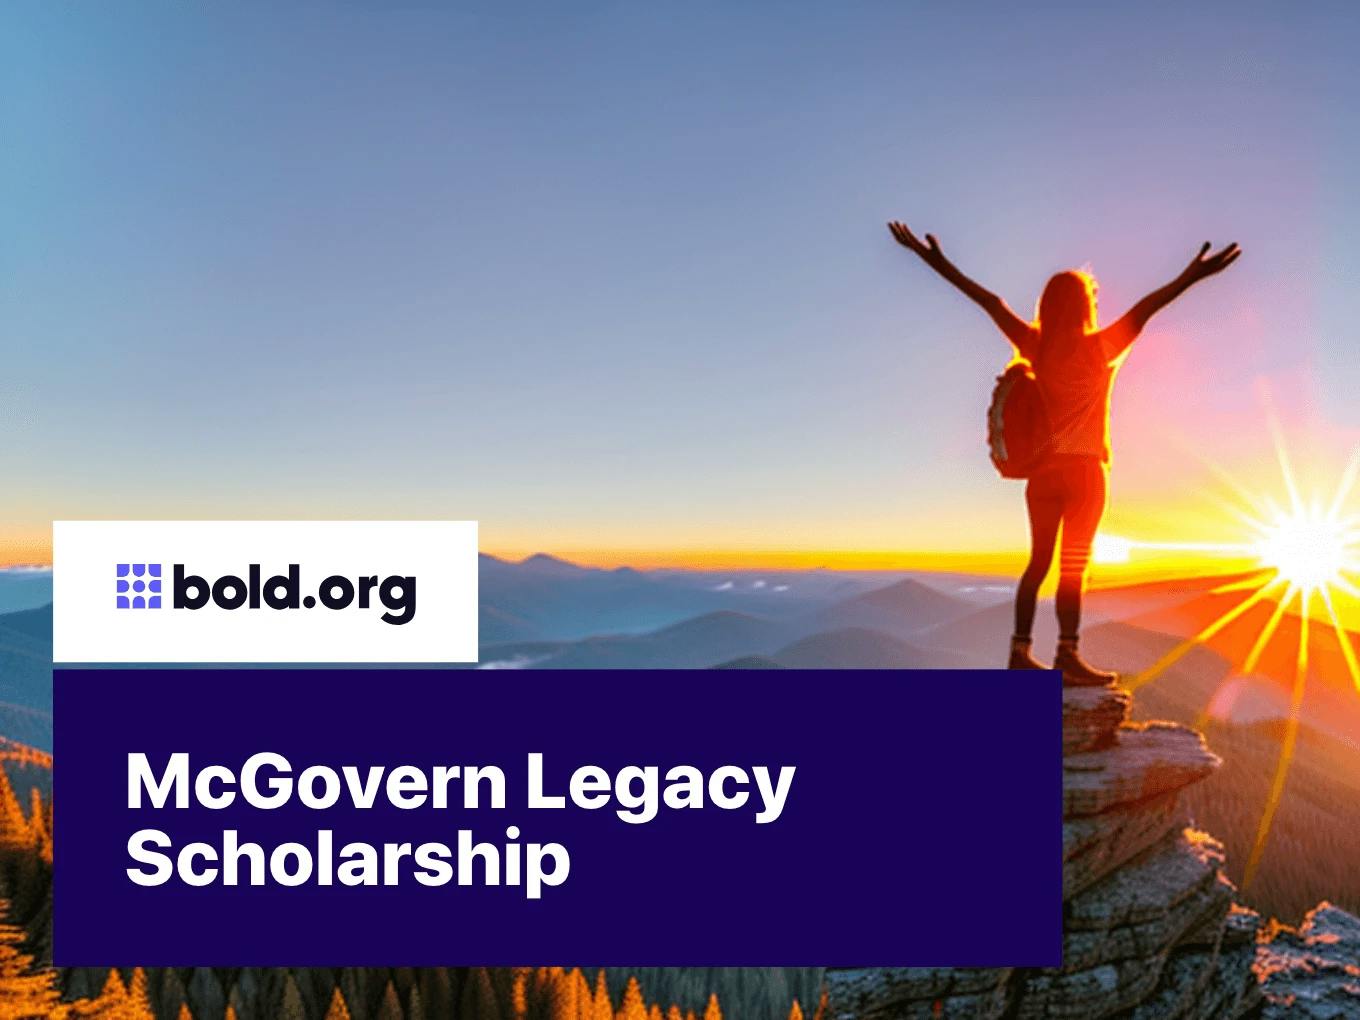 McGovern Legacy Scholarship